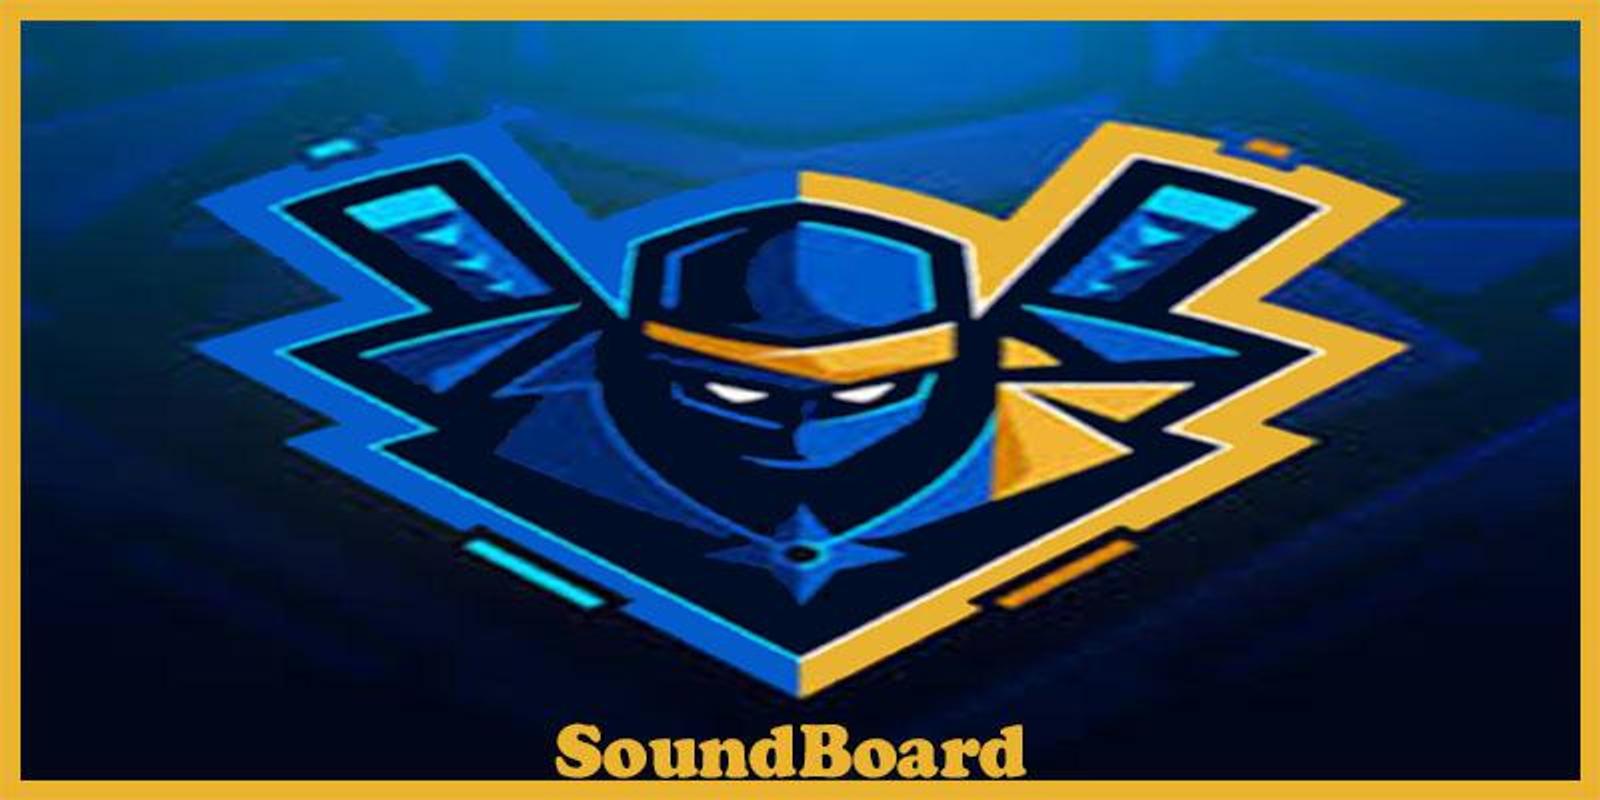 Ninja Fortnite SoundBoard Buttons APK Download - Free ...